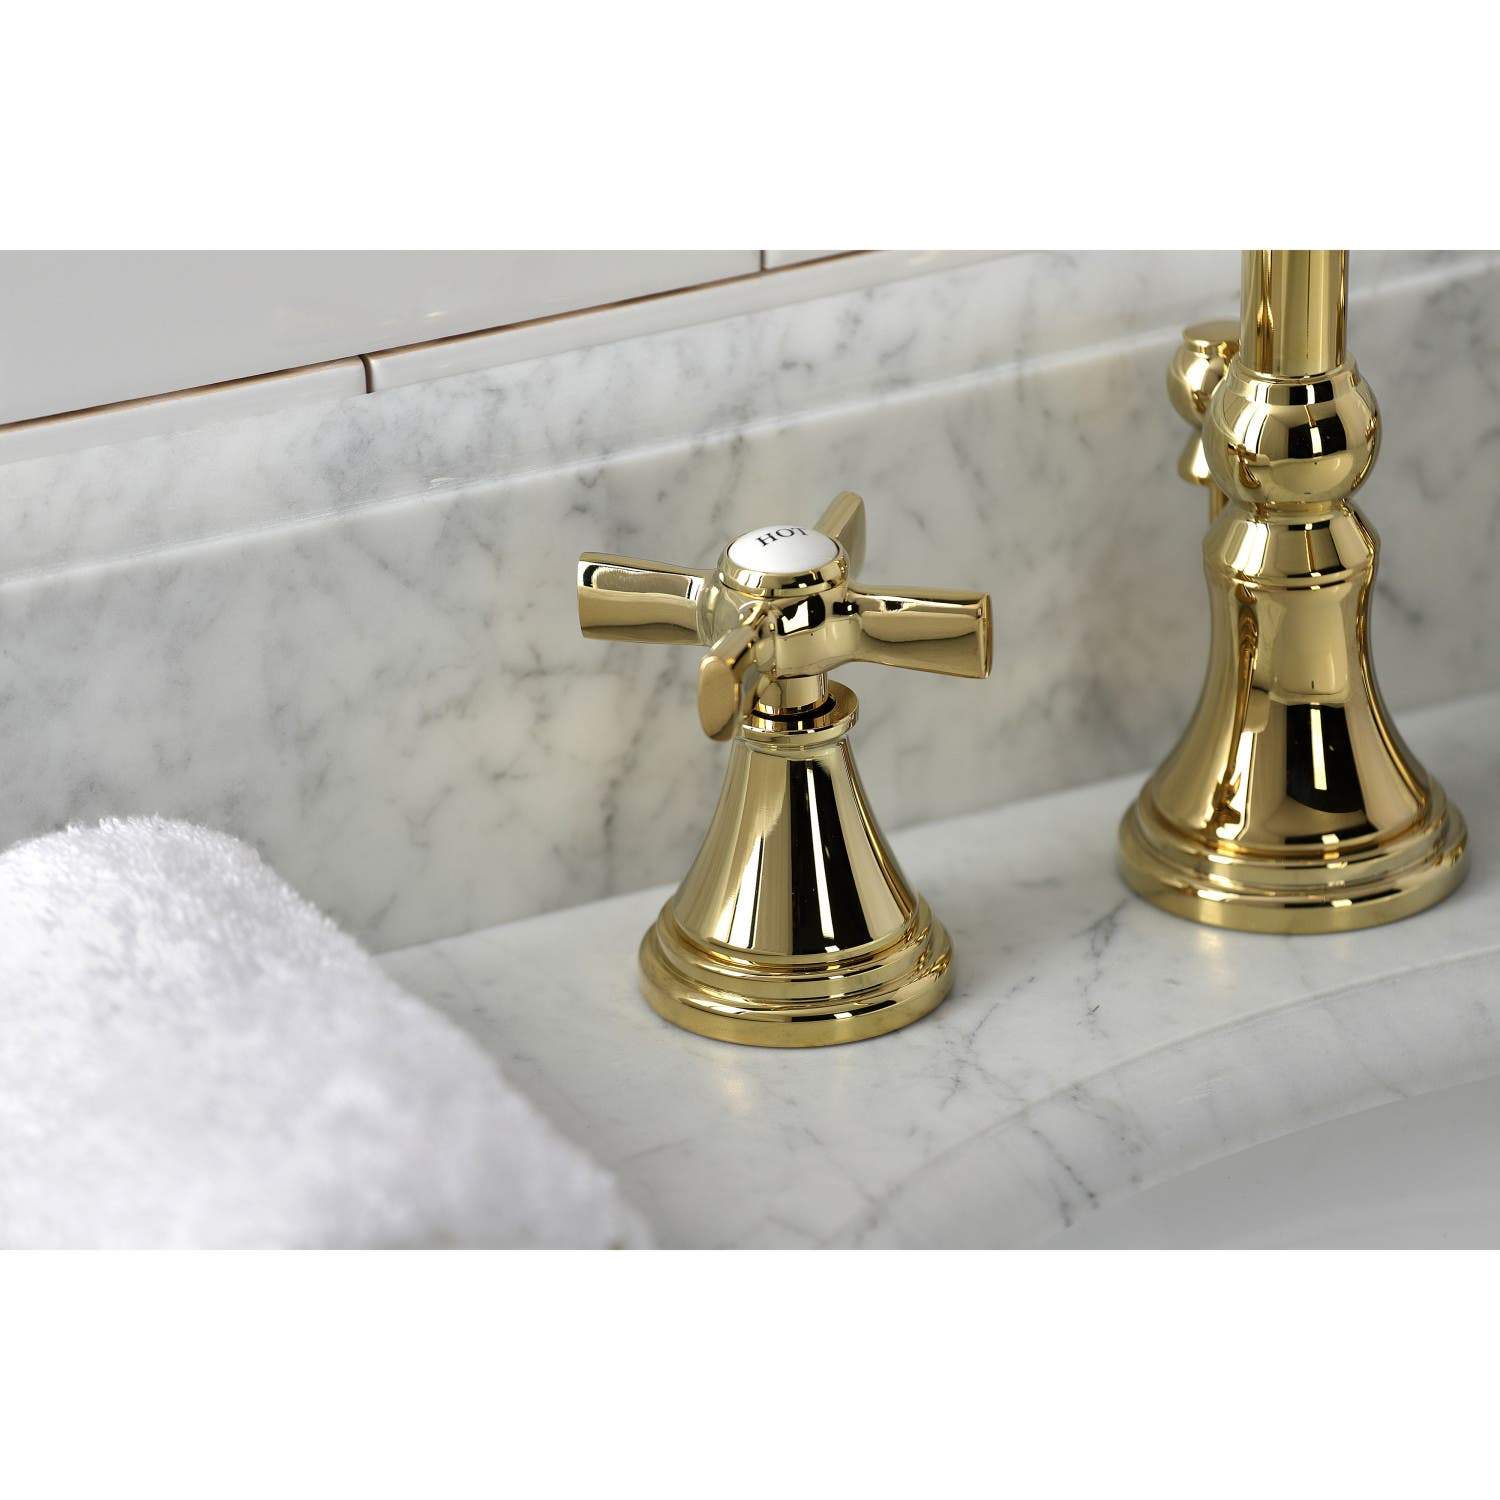 Kingston Brass KS298XZX-P Millennium Widespread Bathroom Faucet with Brass Pop-Up